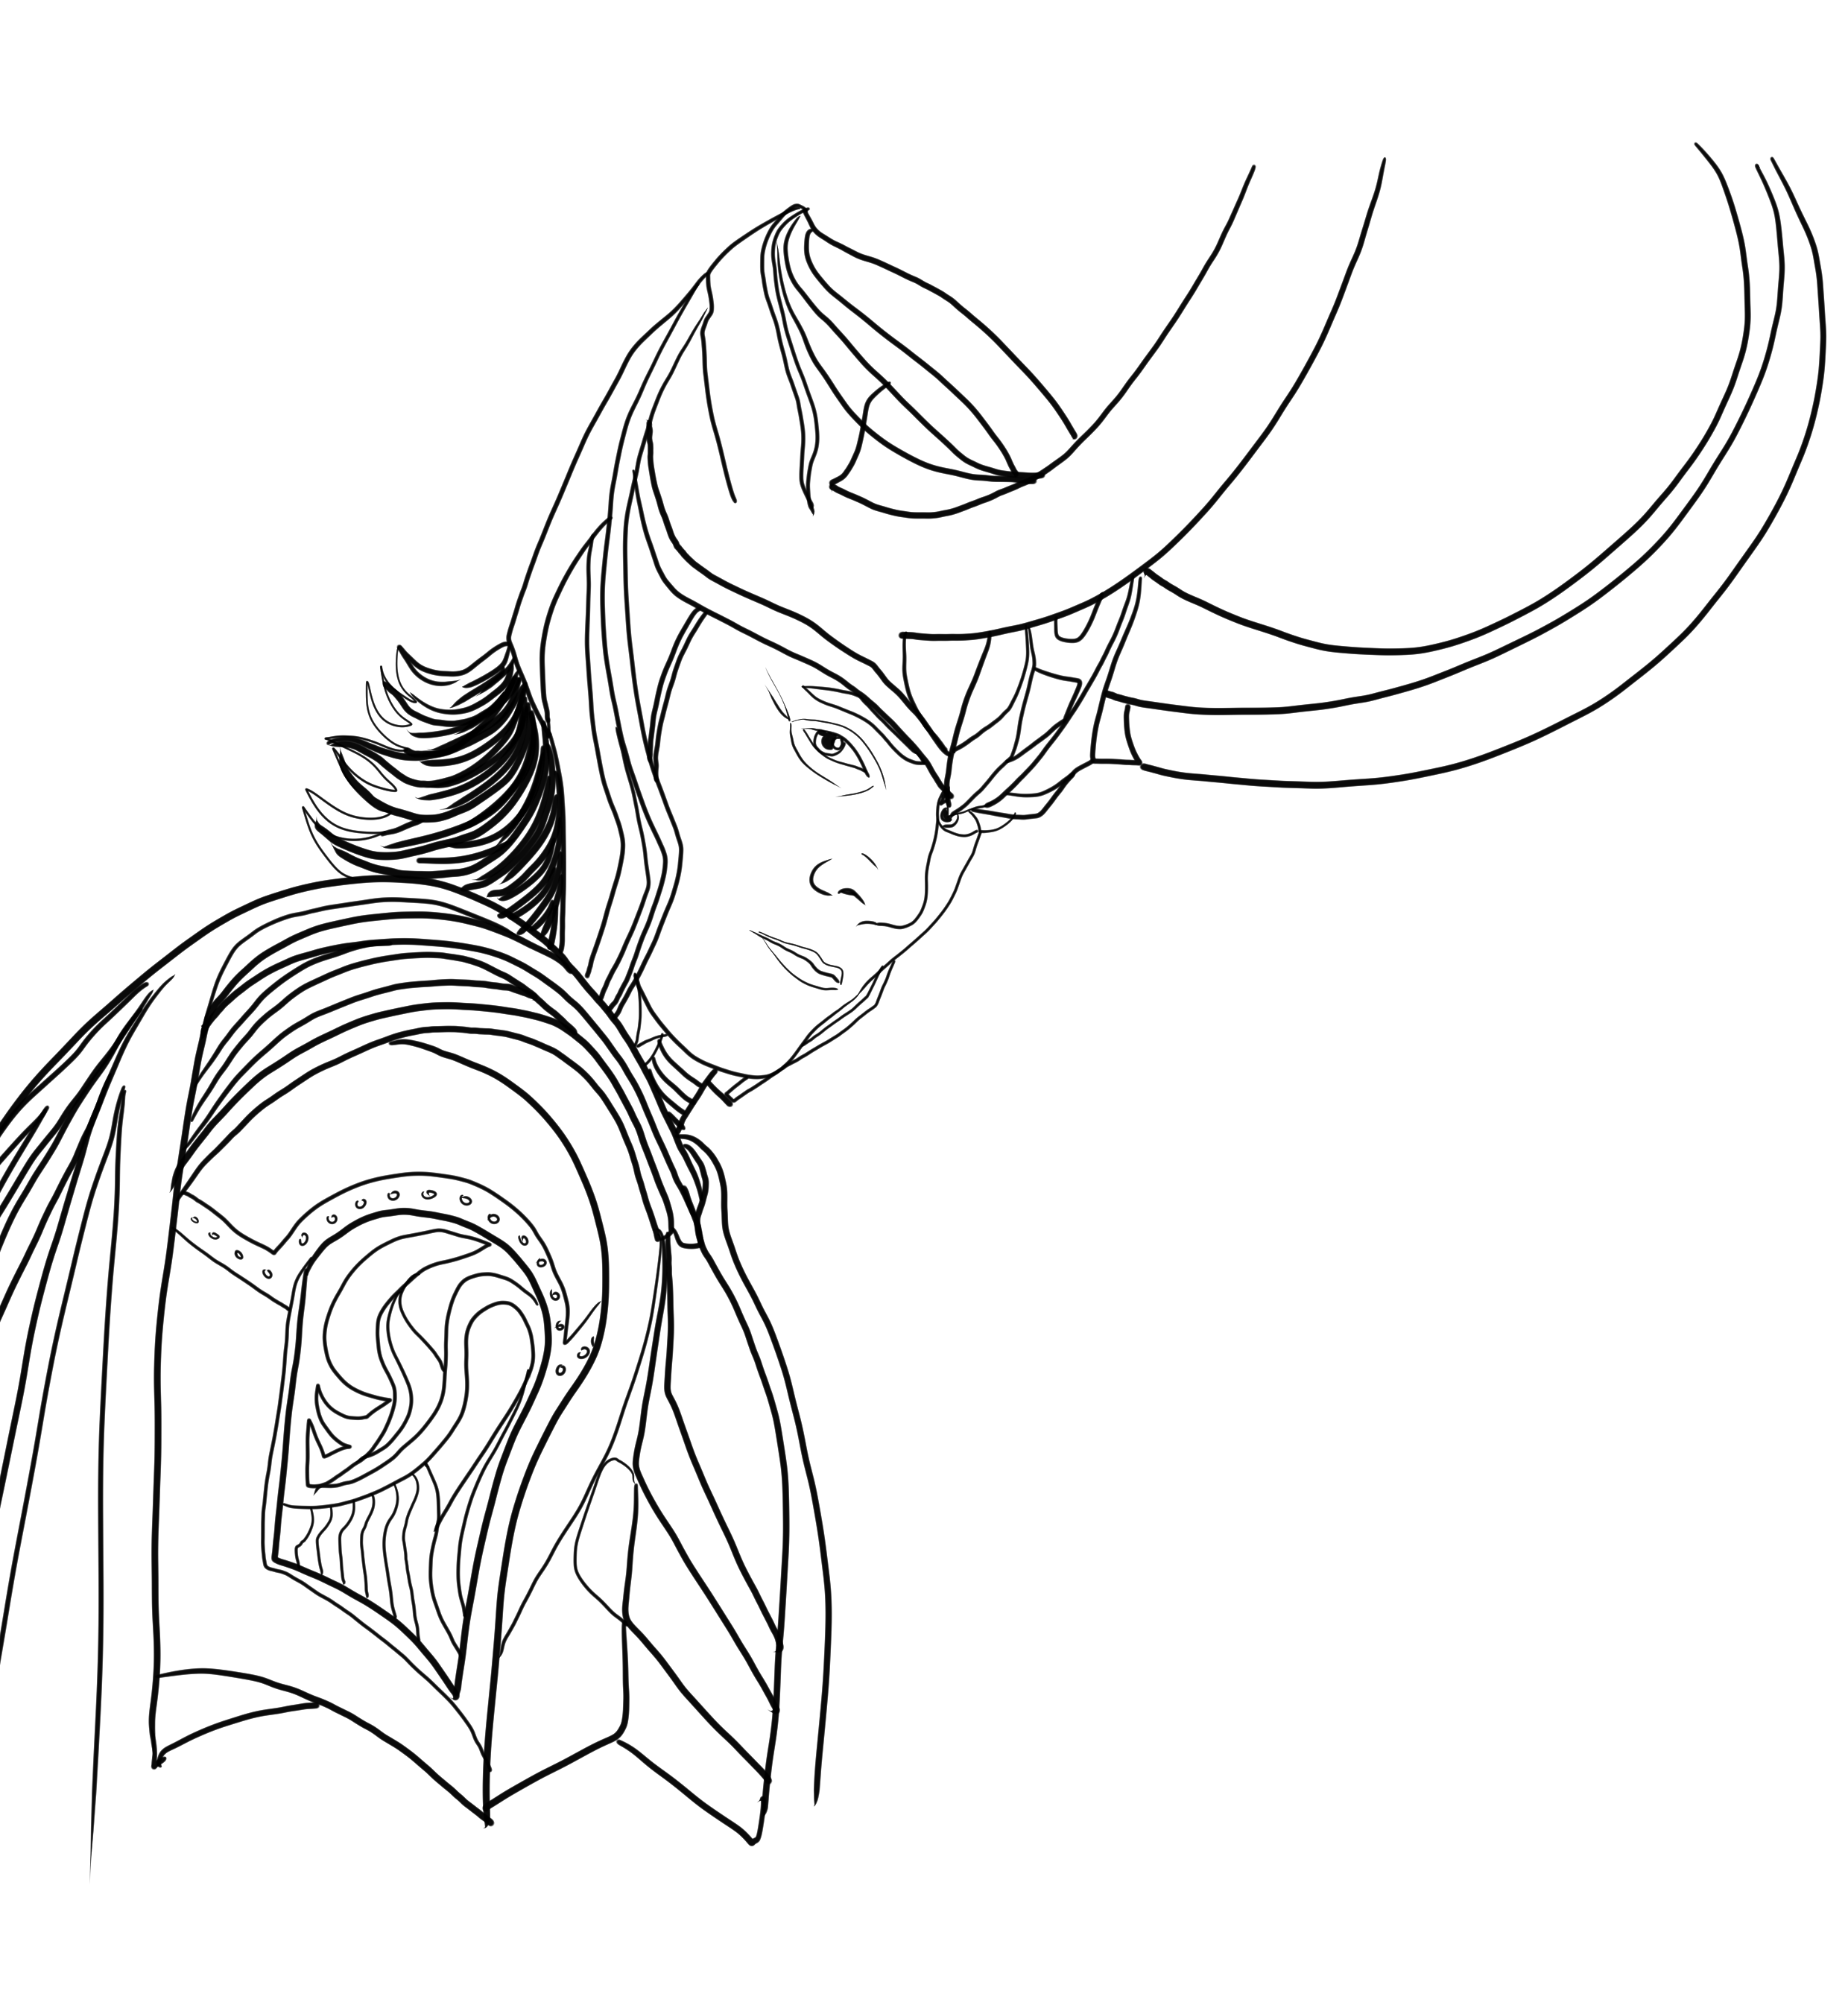 Dibujo de Loki 04 de Loki para imprimir y colorear